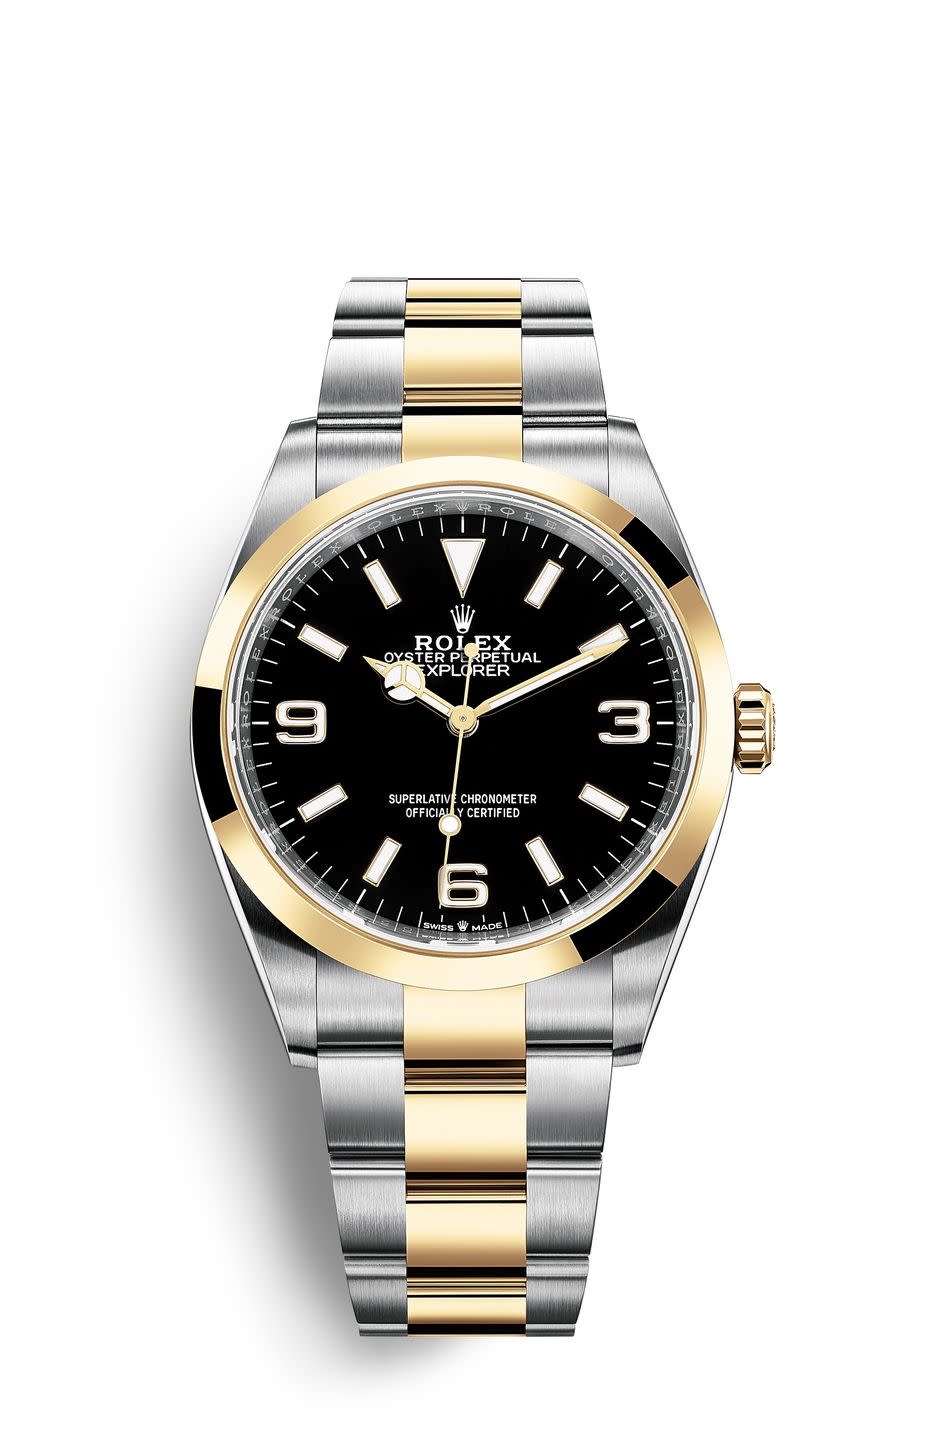 8) The Timepiece: Rolex